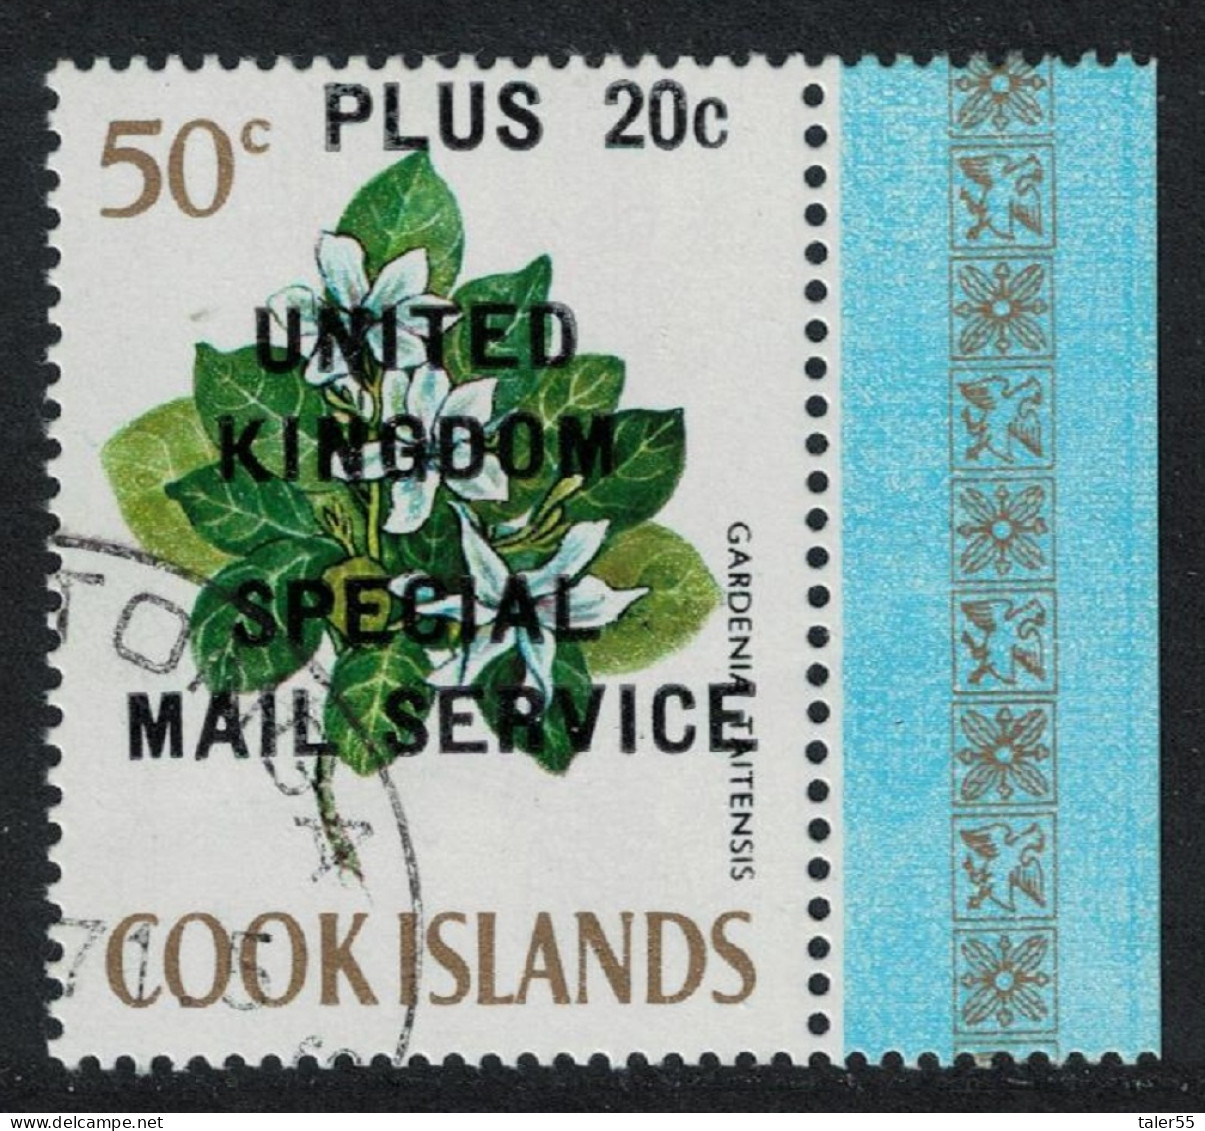 Cook Is. Surch 'PLUS 20c UNITED KINGDOM SPECIAL MAIL SERVICE' 1971 Canc SG#344 MI#267 - Islas Cook